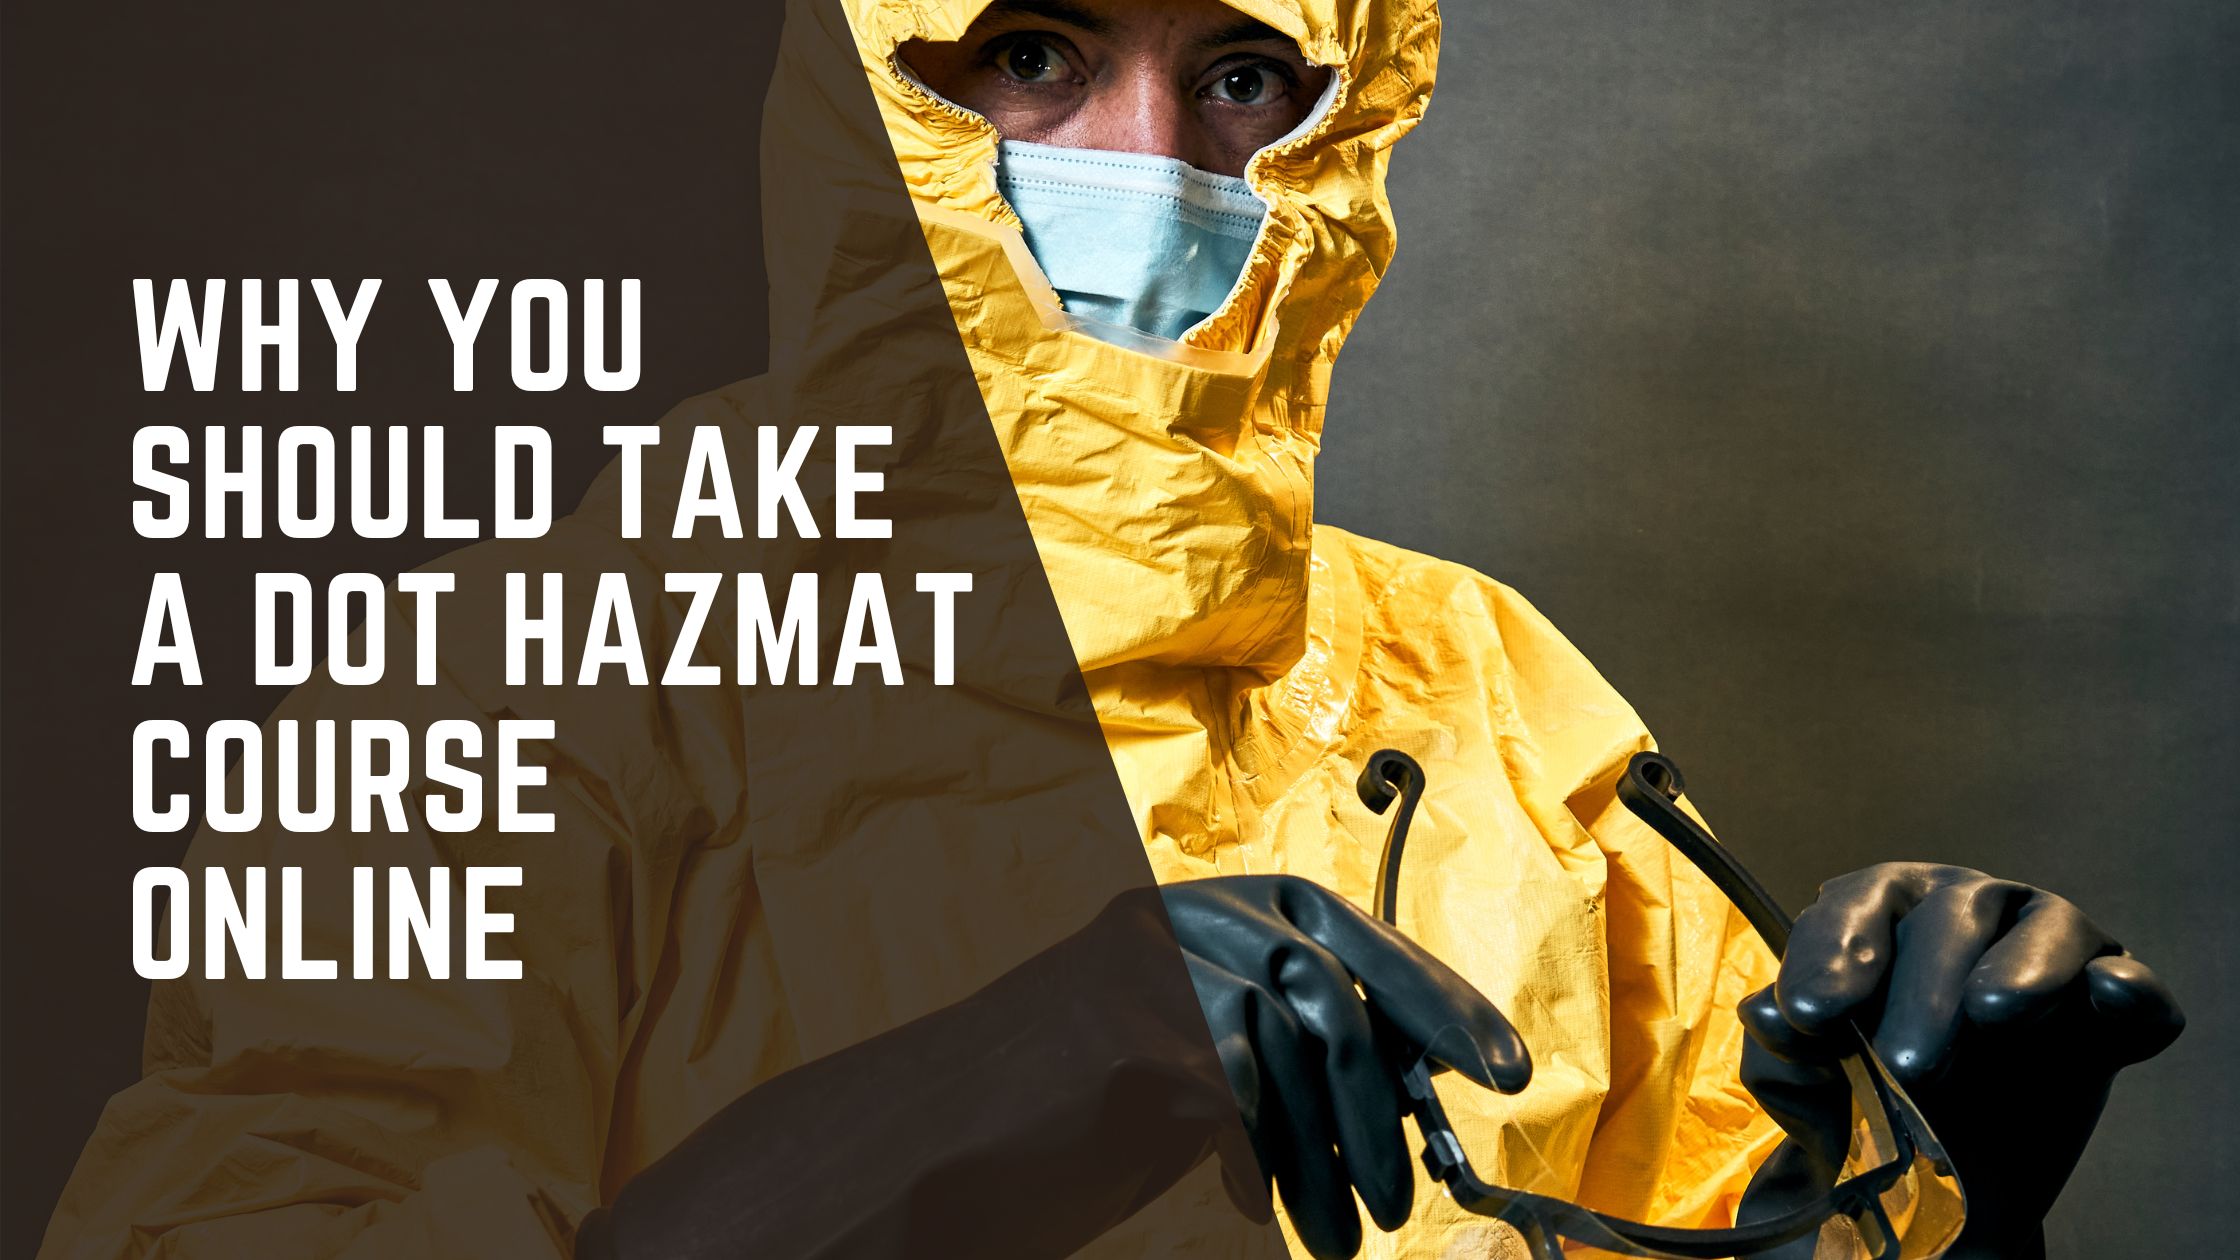 Why You Should Take a DOT Hazmat Course Online